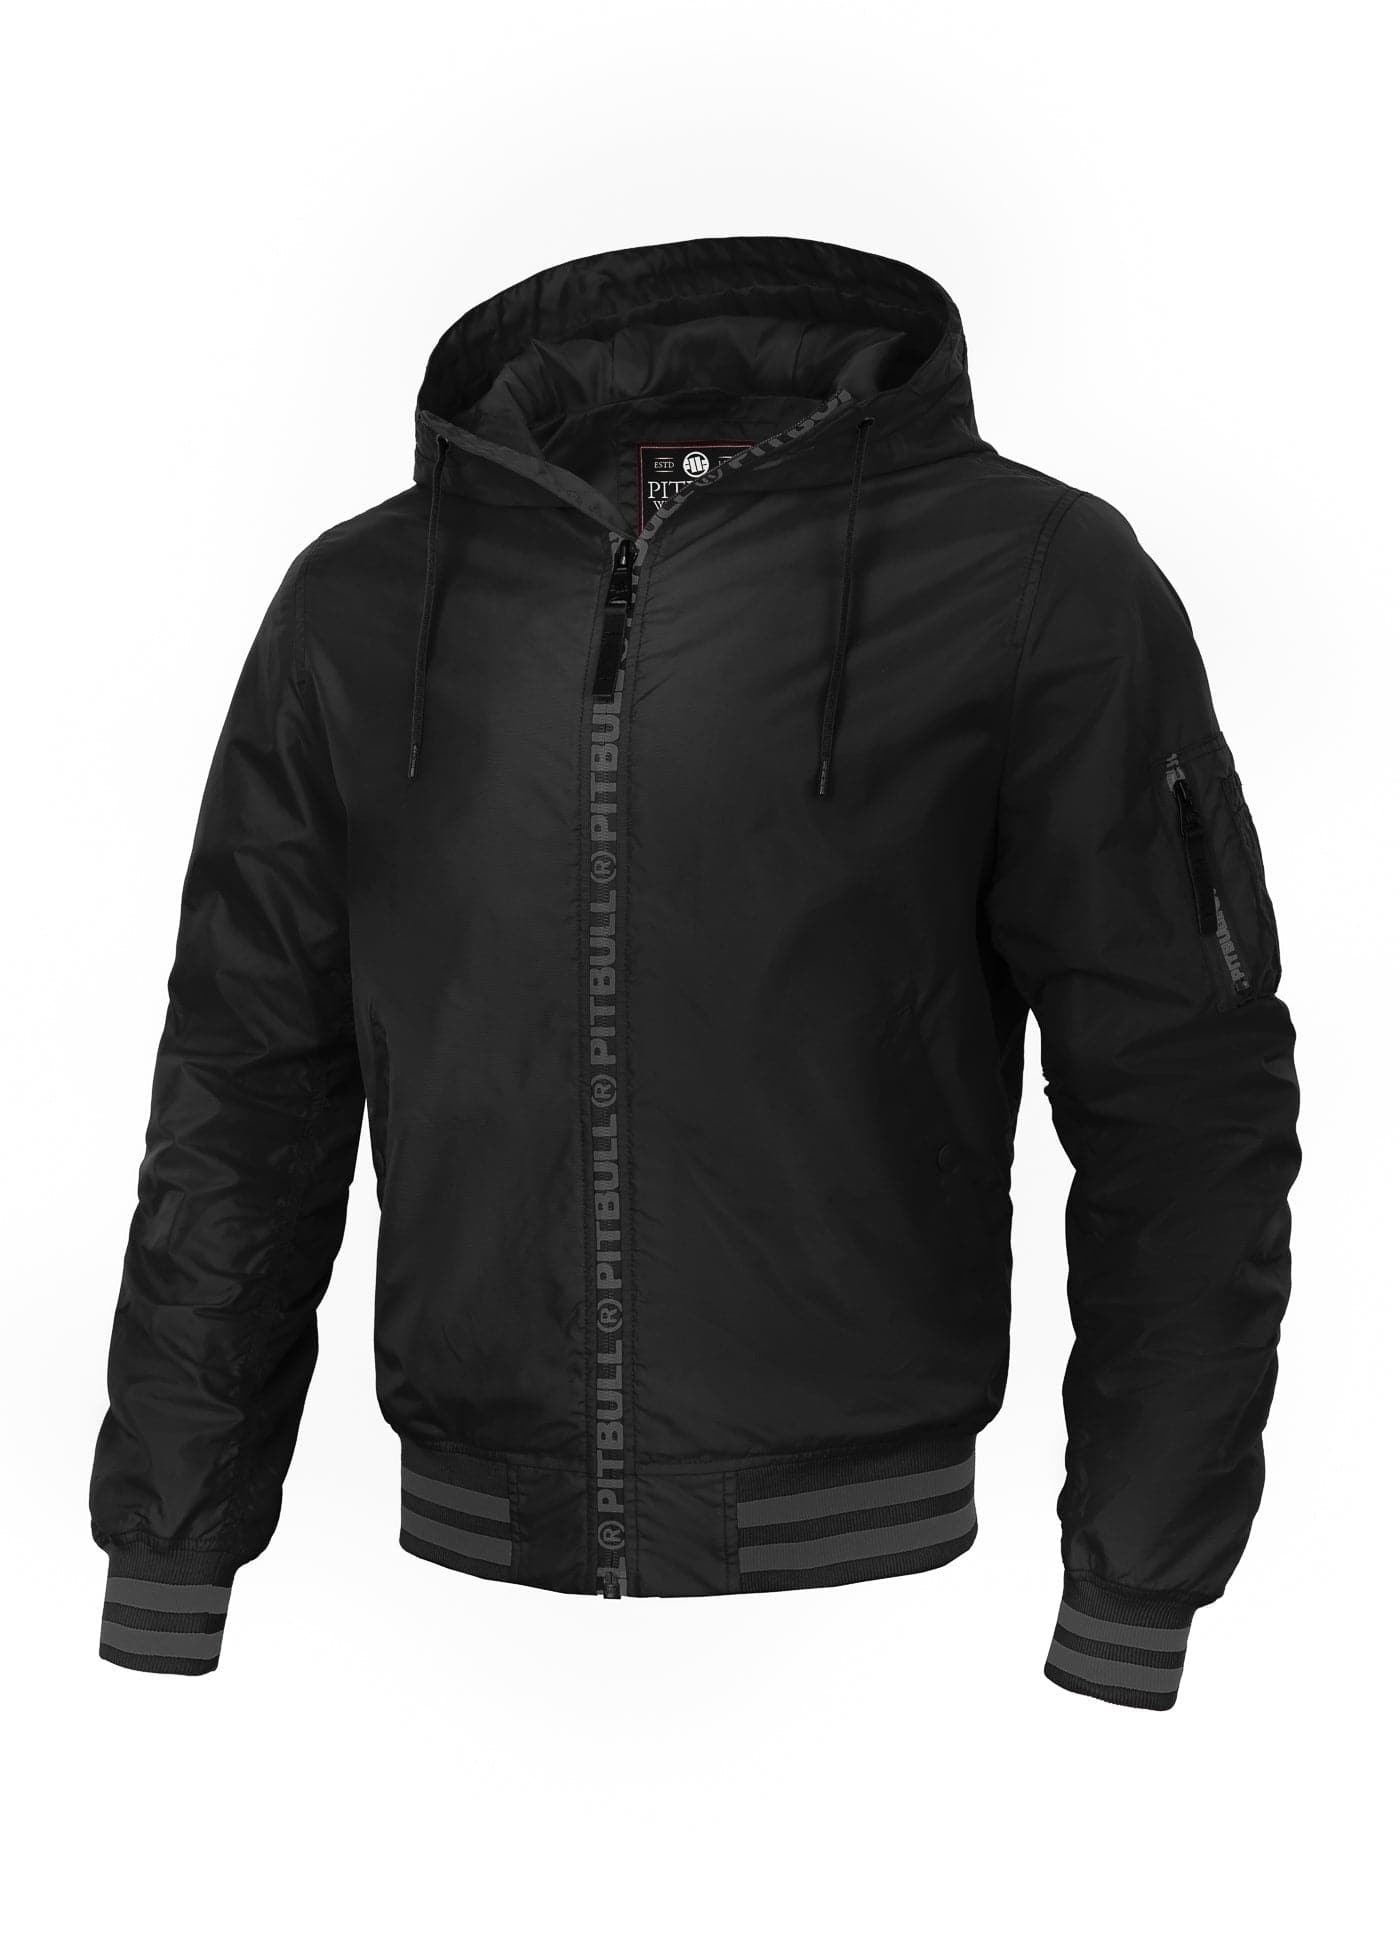 Buy OVERPARK Black Jacket | Pitbull Store